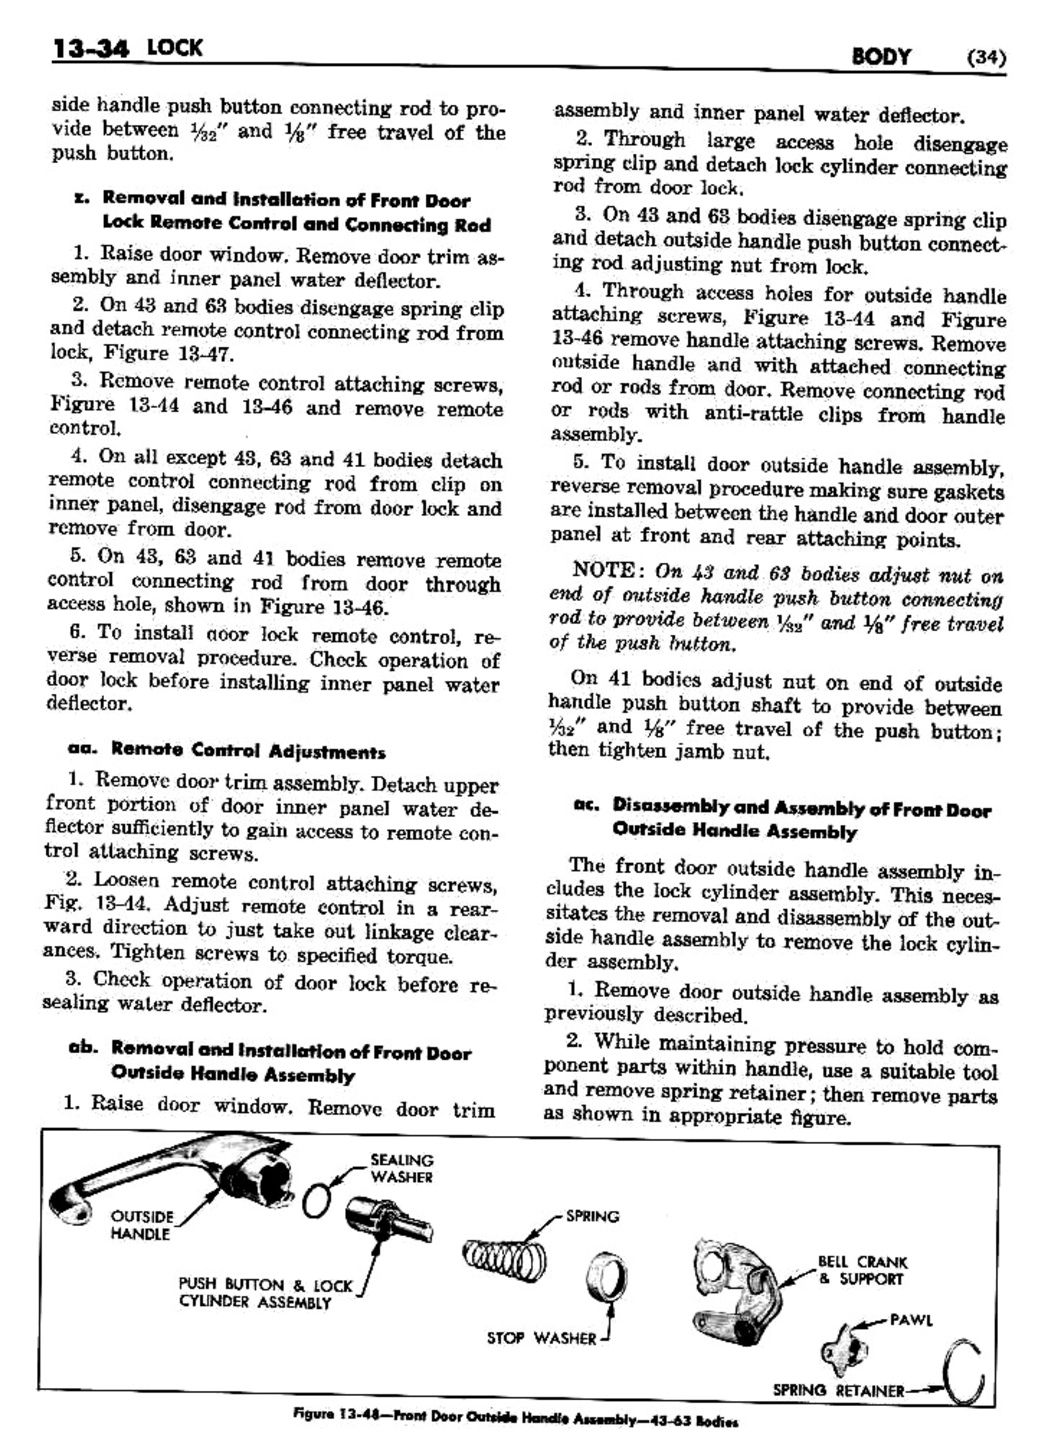 n_1957 Buick Body Service Manual-036-036.jpg